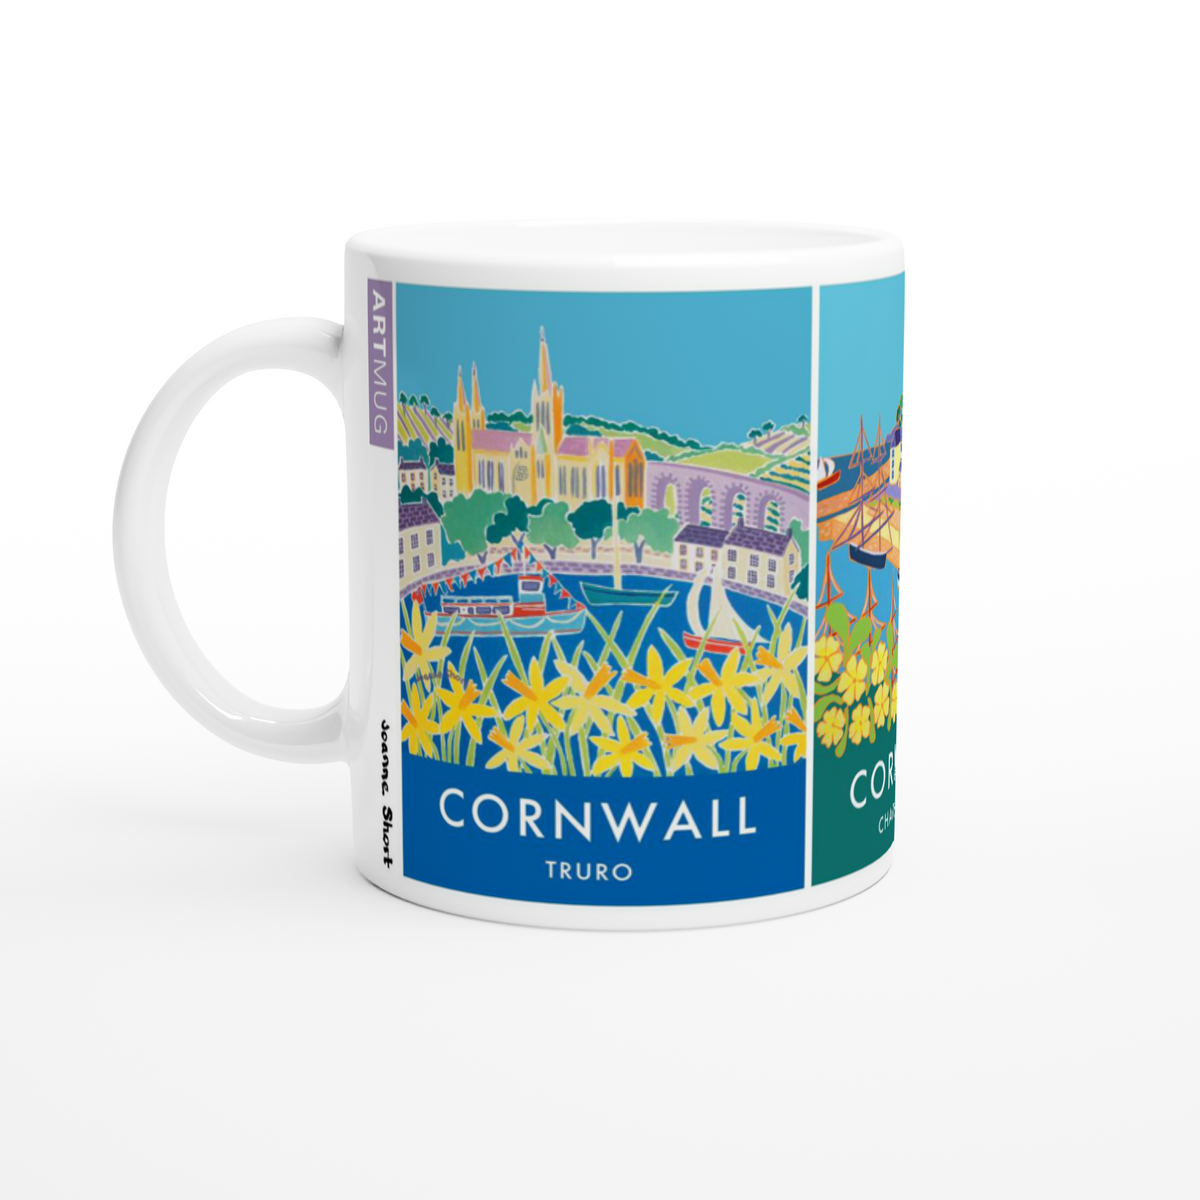 Joanne Short Ceramic Cornish Art Mug featuring Truro, Charlestown and Lostwithiel in Cornwall